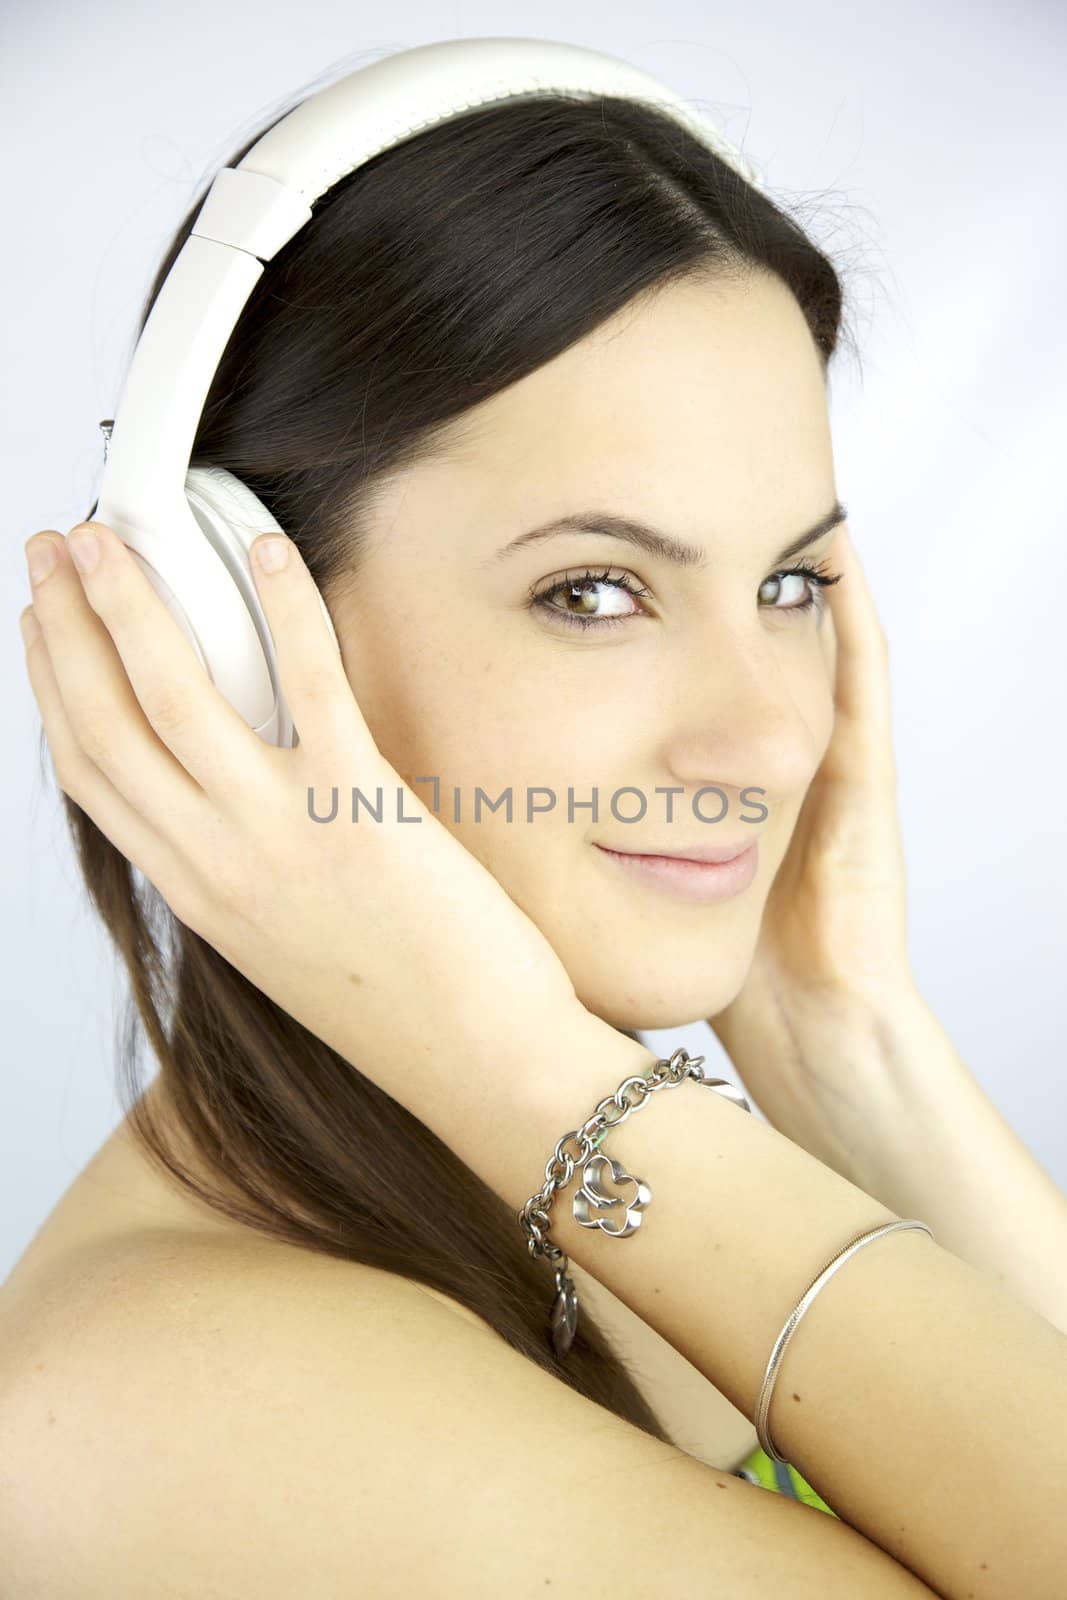 Beautiful girl smiling listening music by fmarsicano